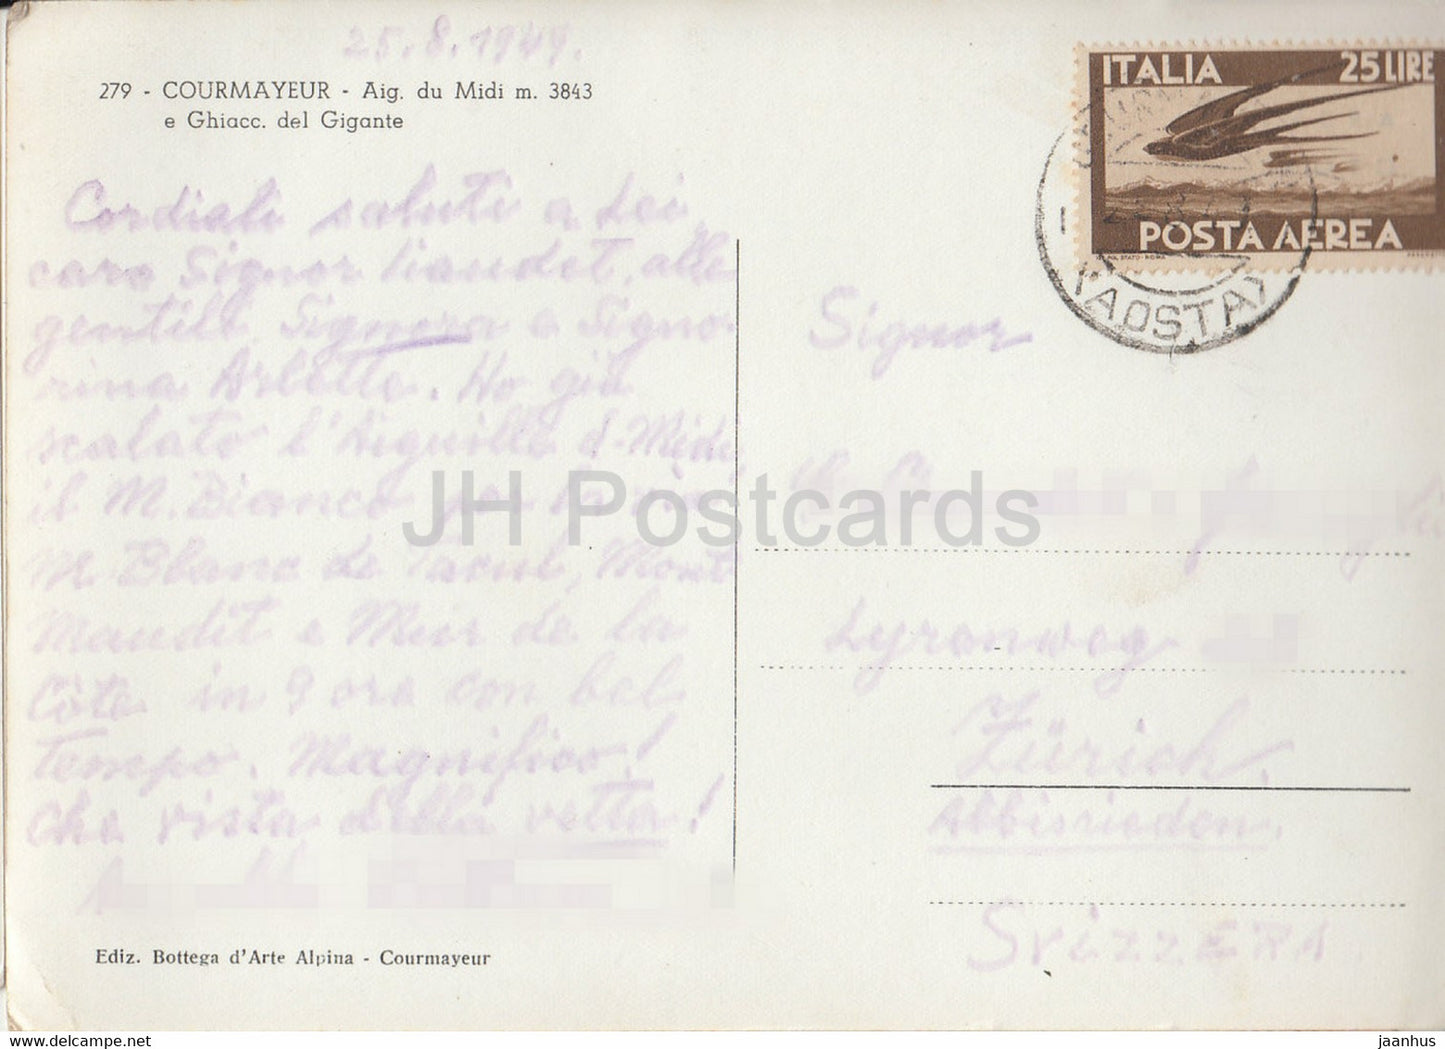 Courmayeur - Aig du Midi 3843 m e Ghiacc del Gigante - 279 - old postcard - 1949 - Italy - used